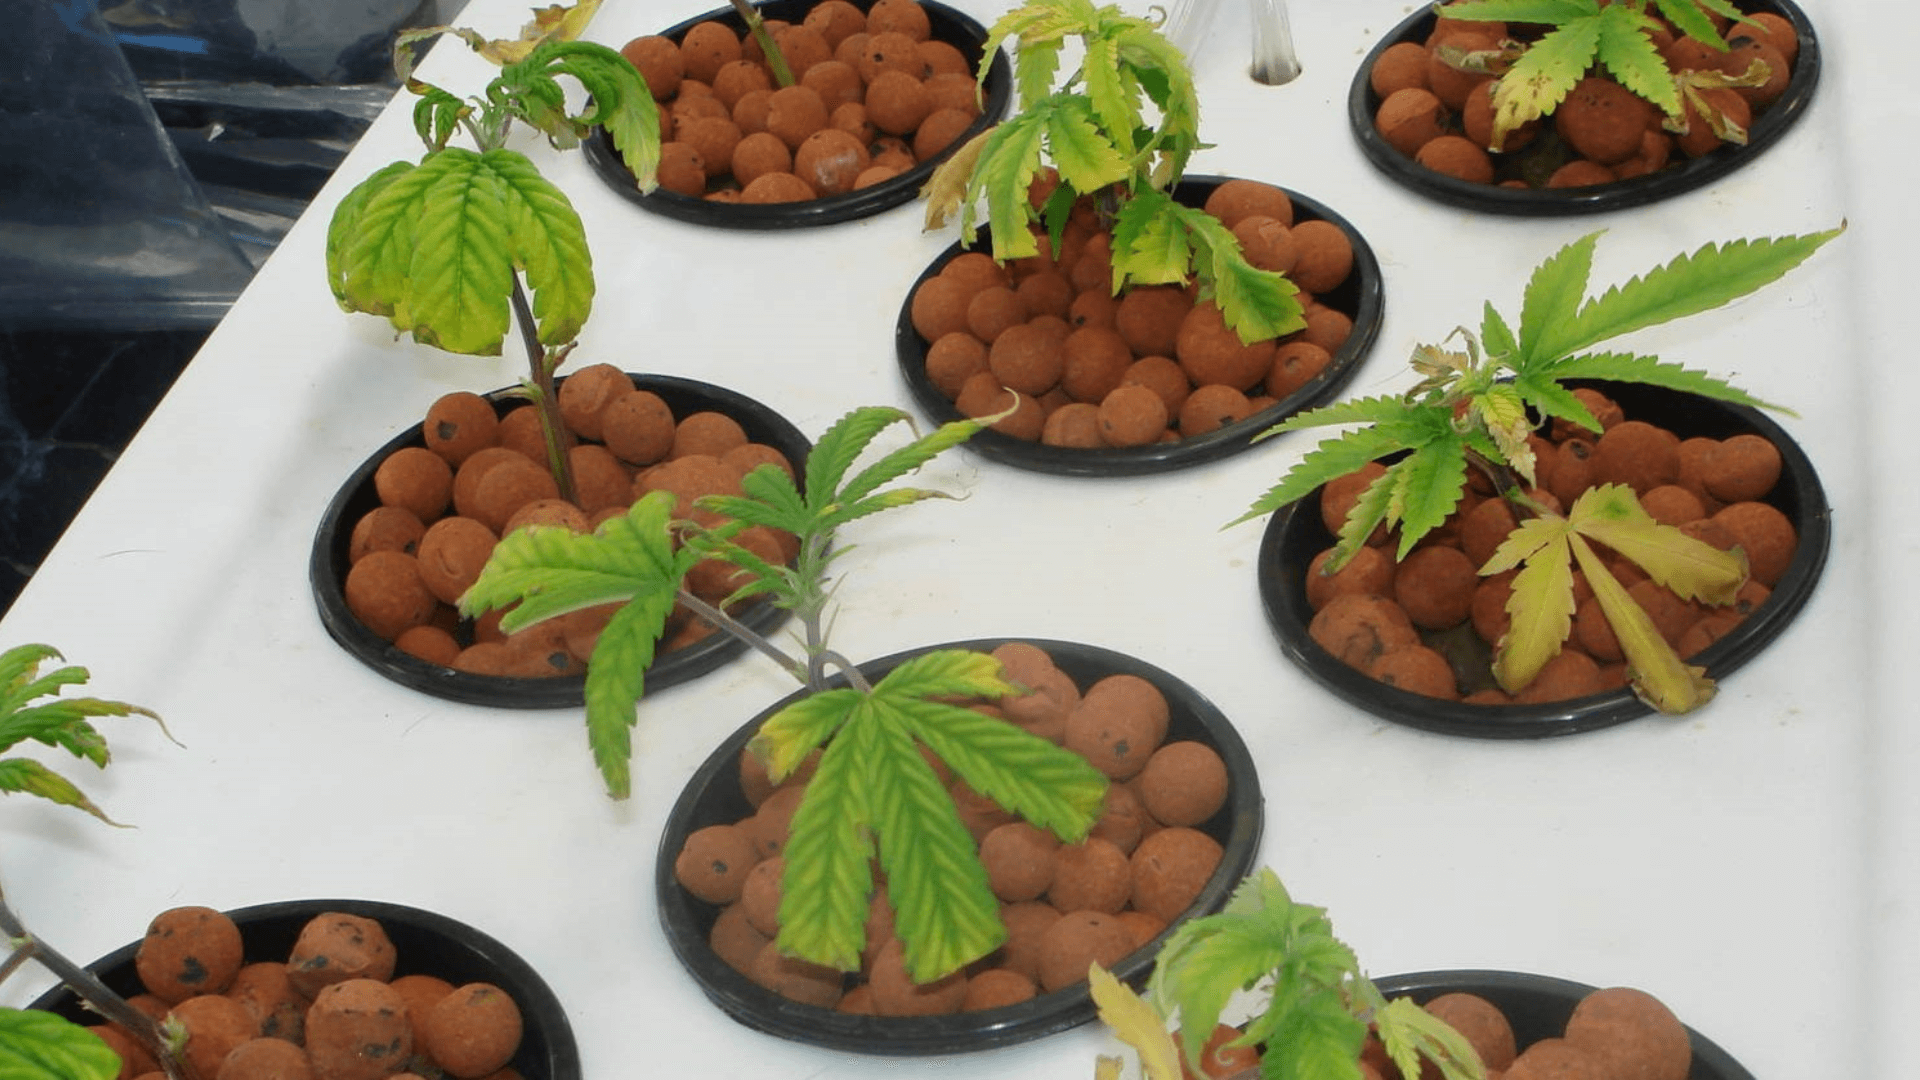 over fertilizing marijuanna plants